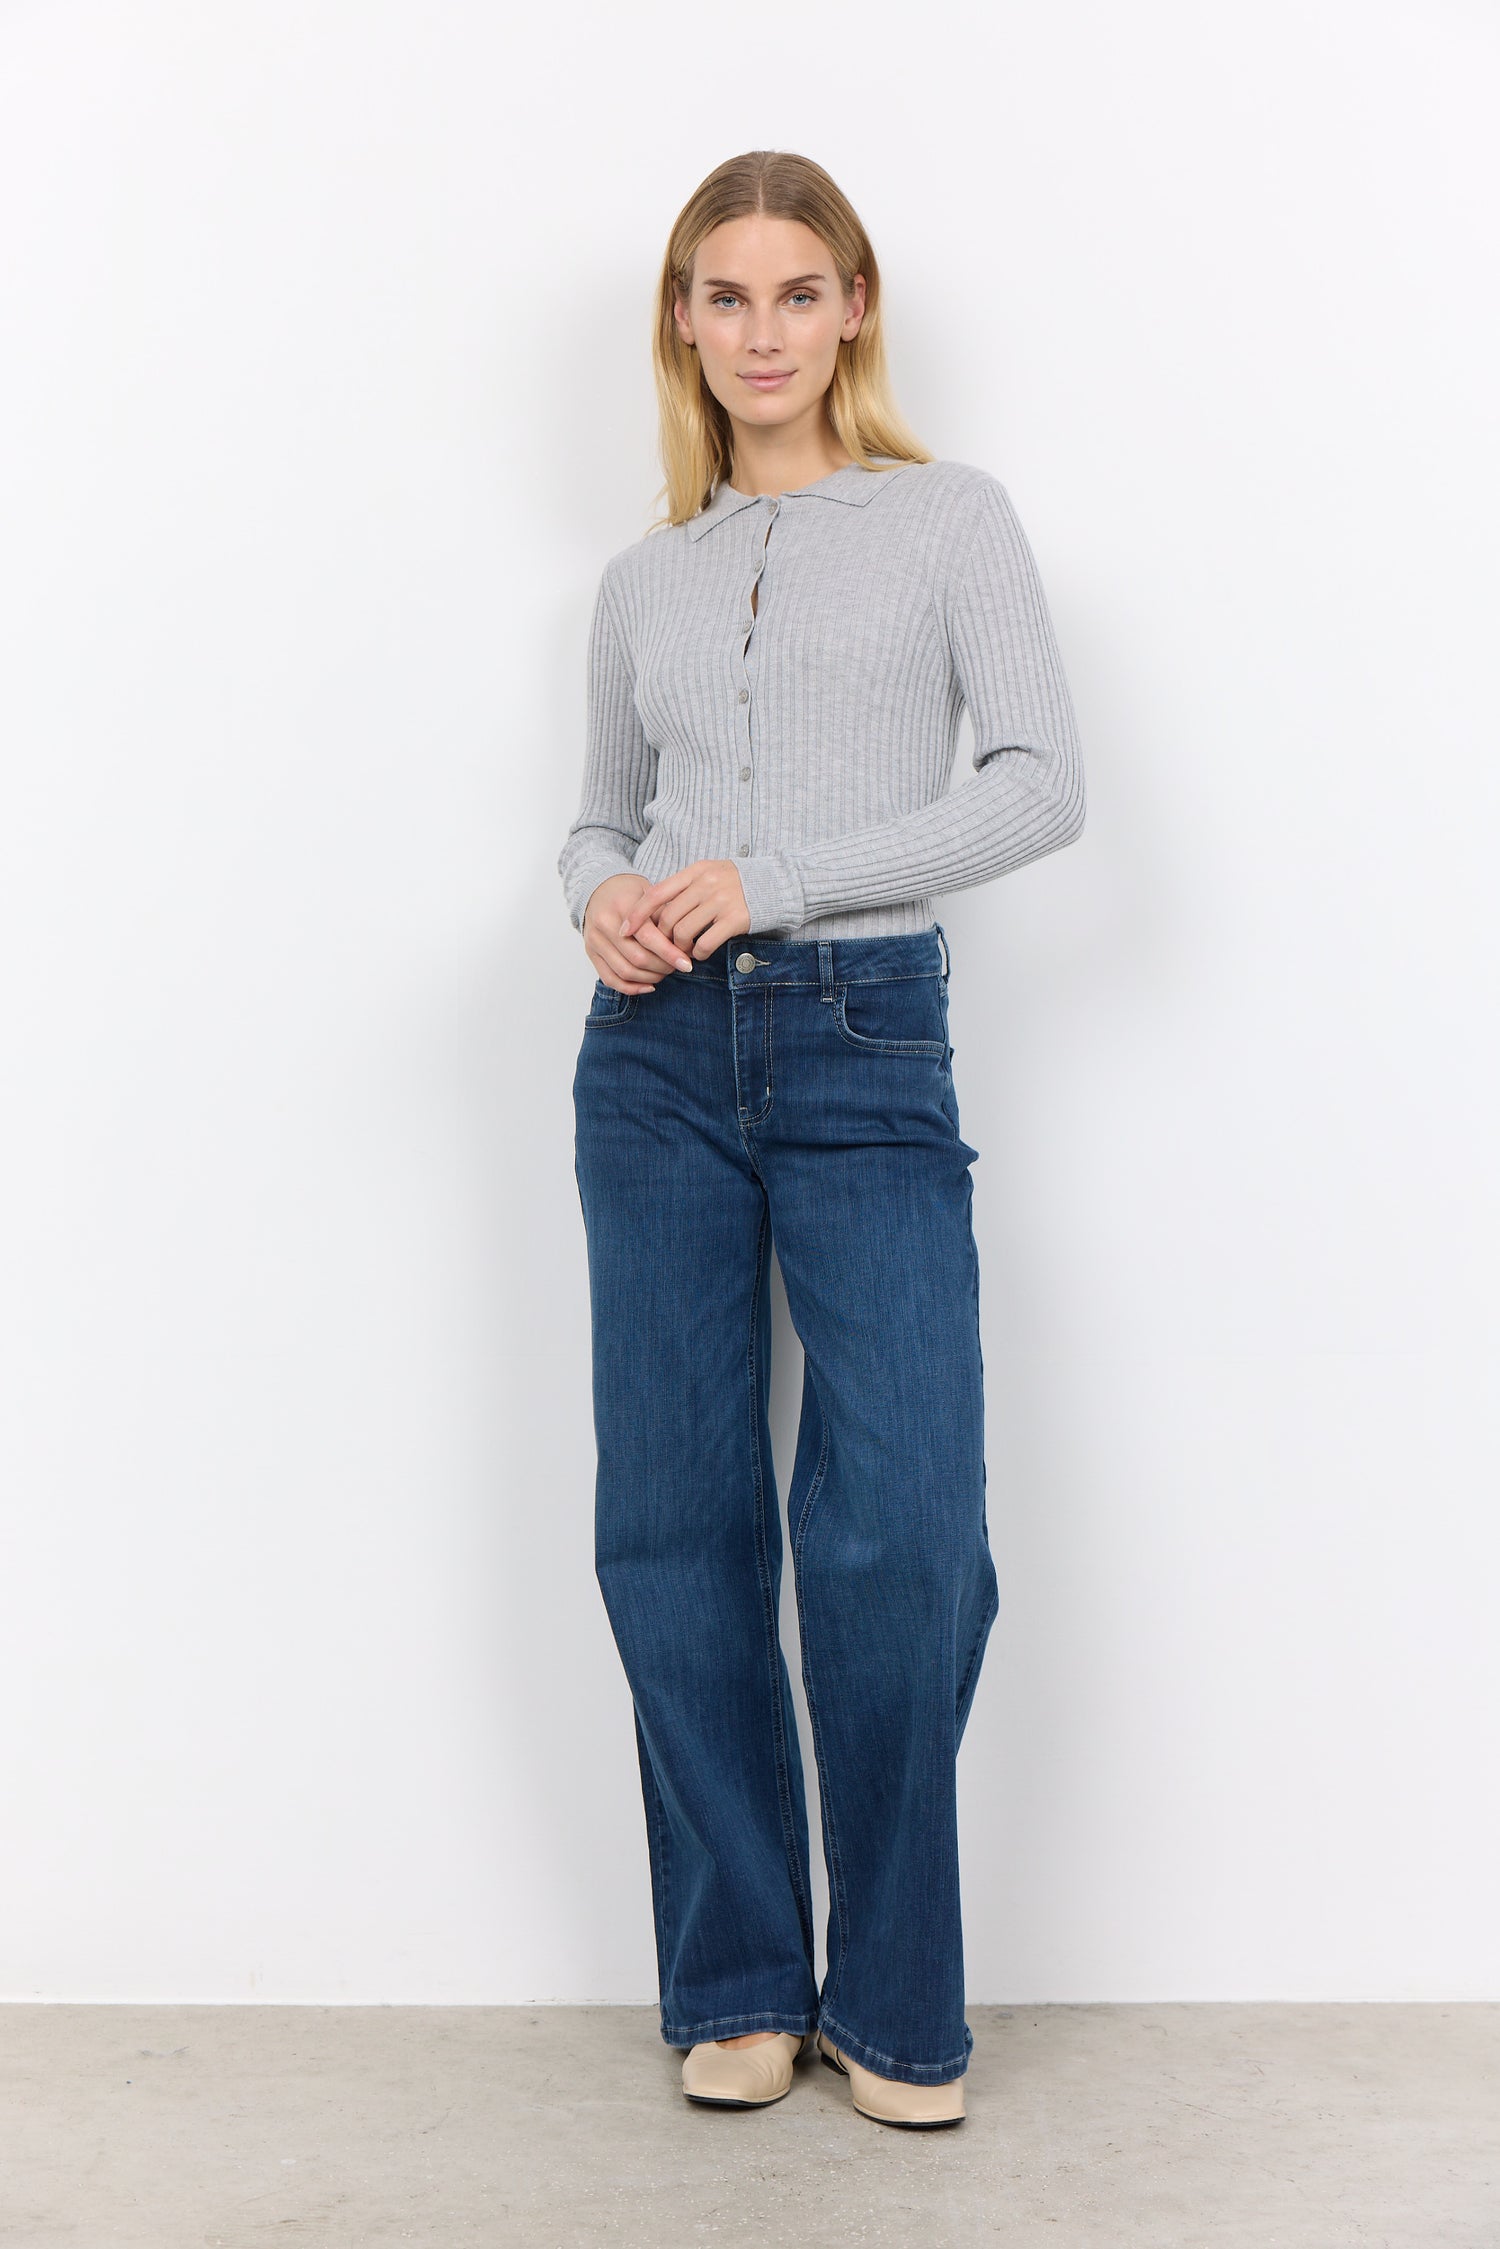 Kimberly 24-B Jeans